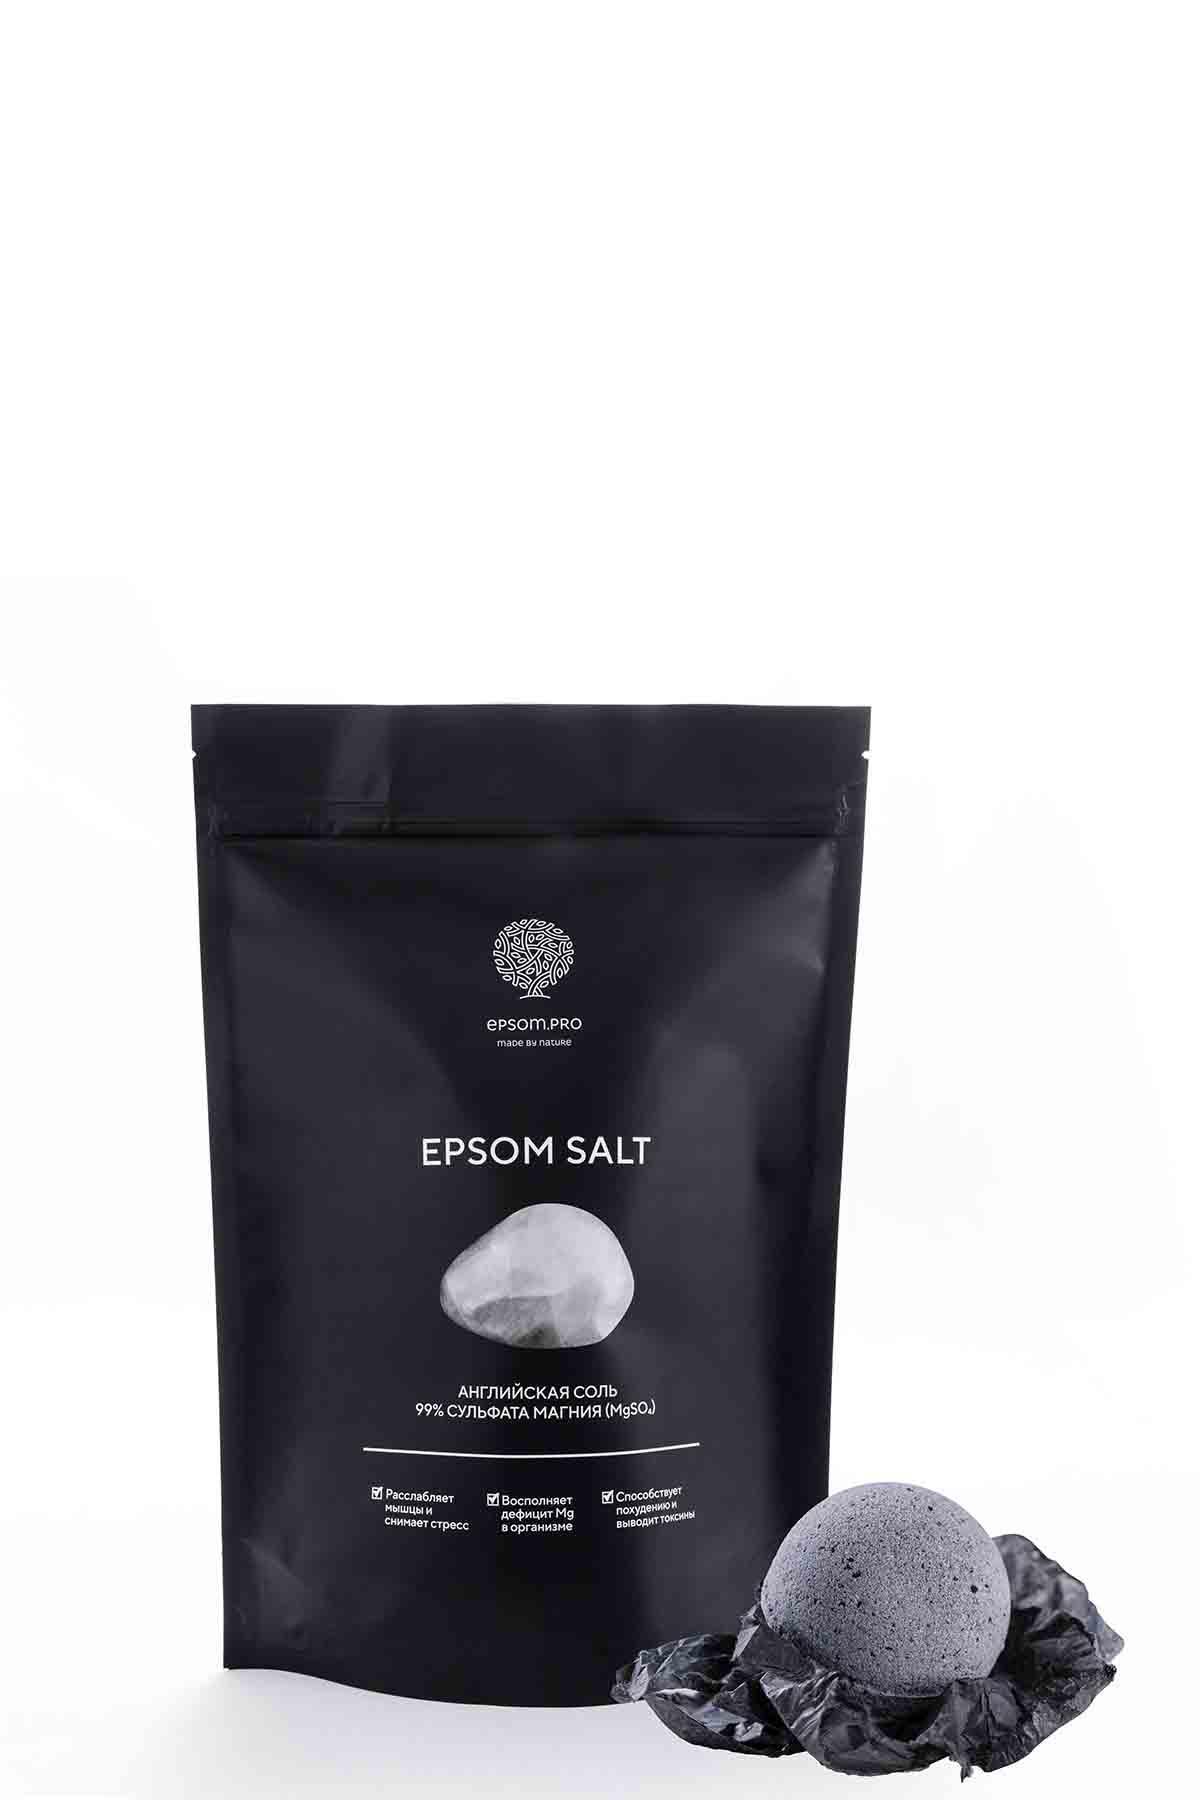 Английская соль Epsom Salt (310 руб.), бомбочка Dark Prince (265 руб.) &mdash; все Epsom.Pro, (epsom.pro)